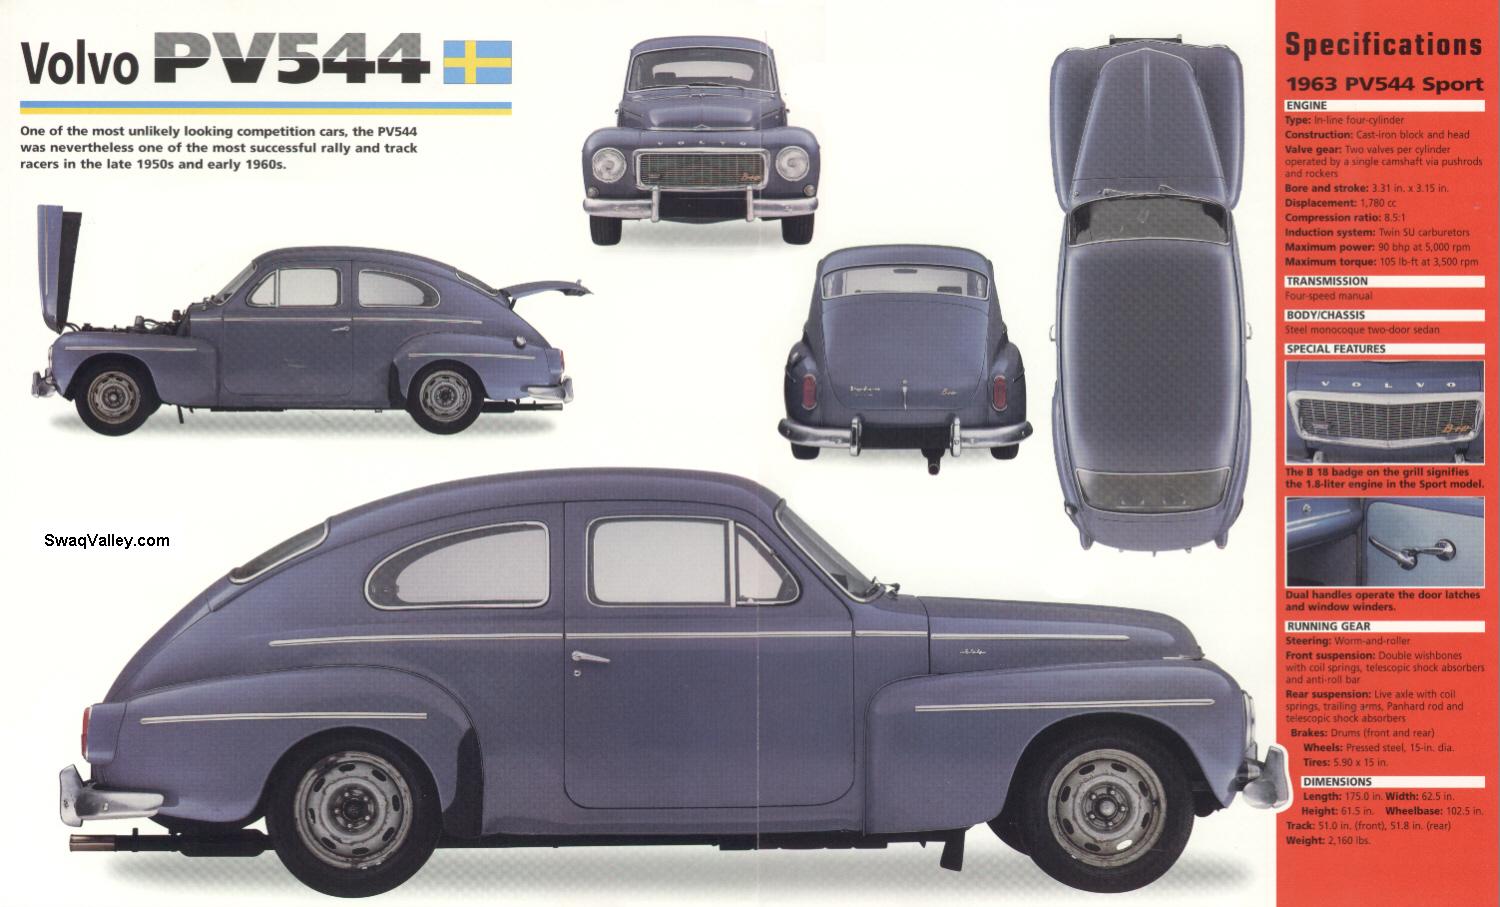 Volvo PV 544 A